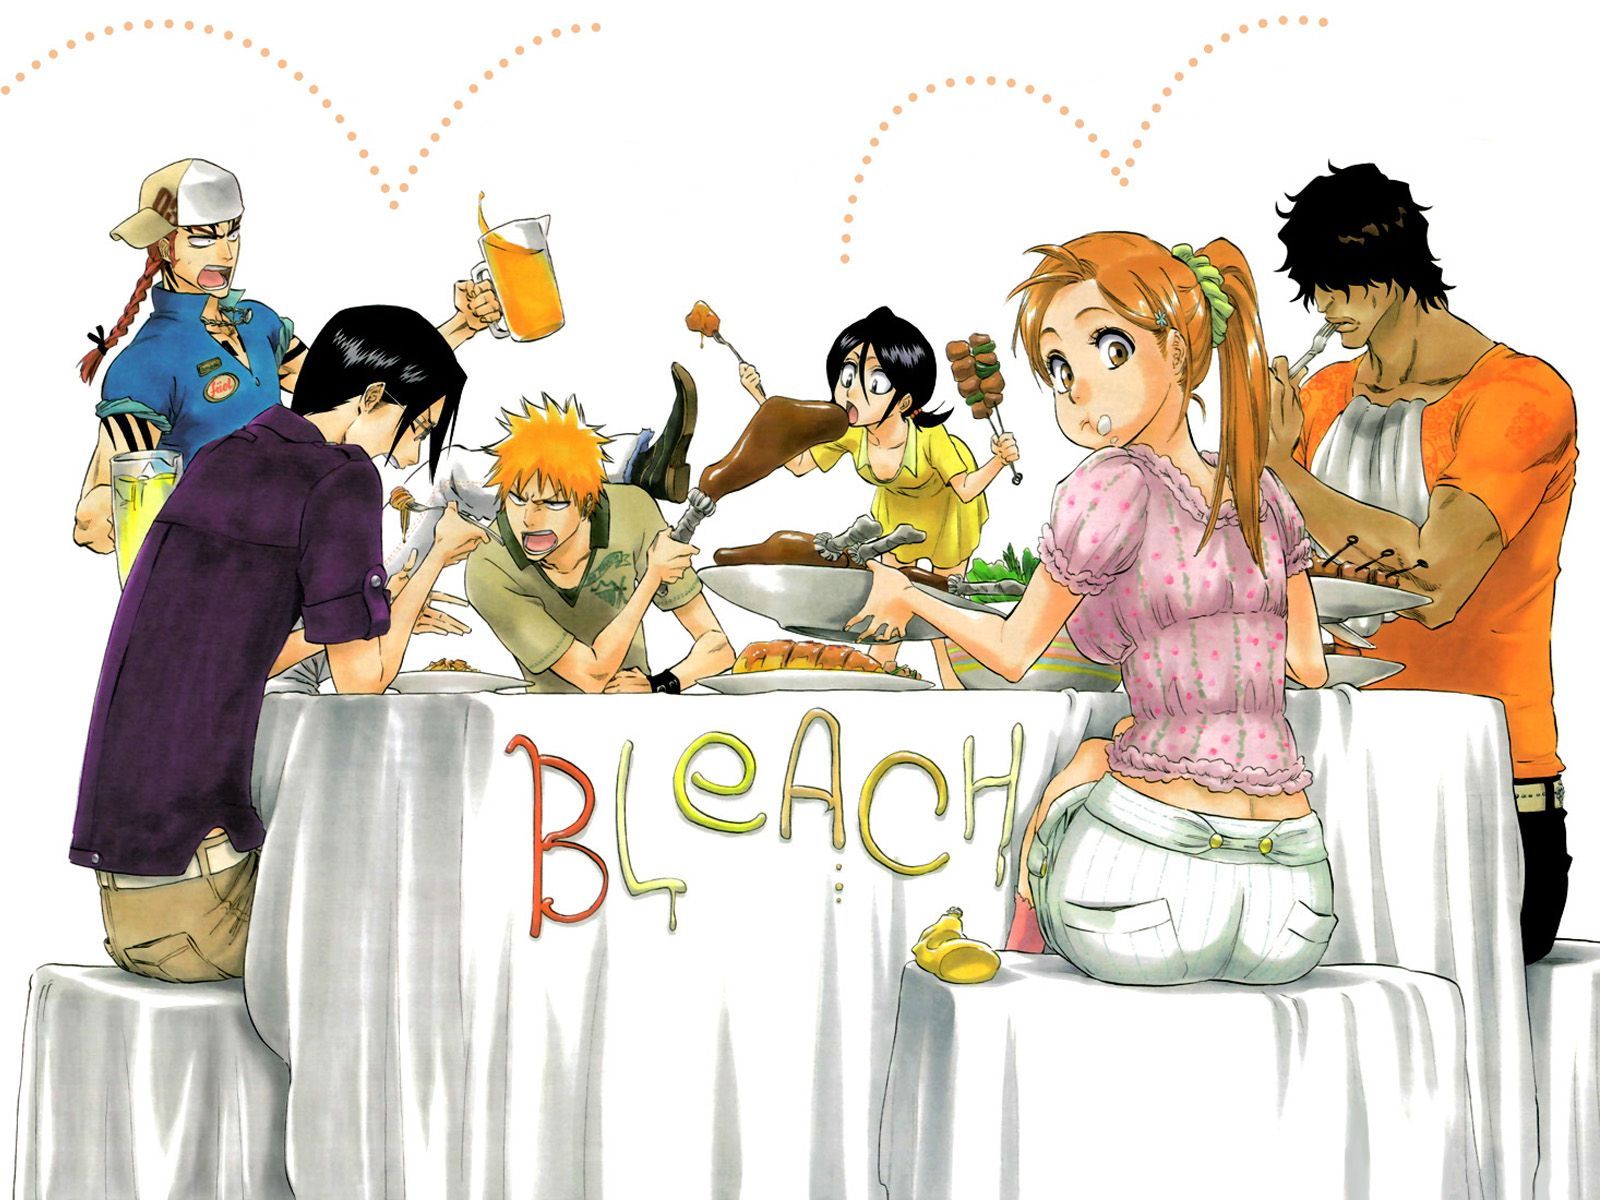 Ichigo and friends enjoying a nice meal.